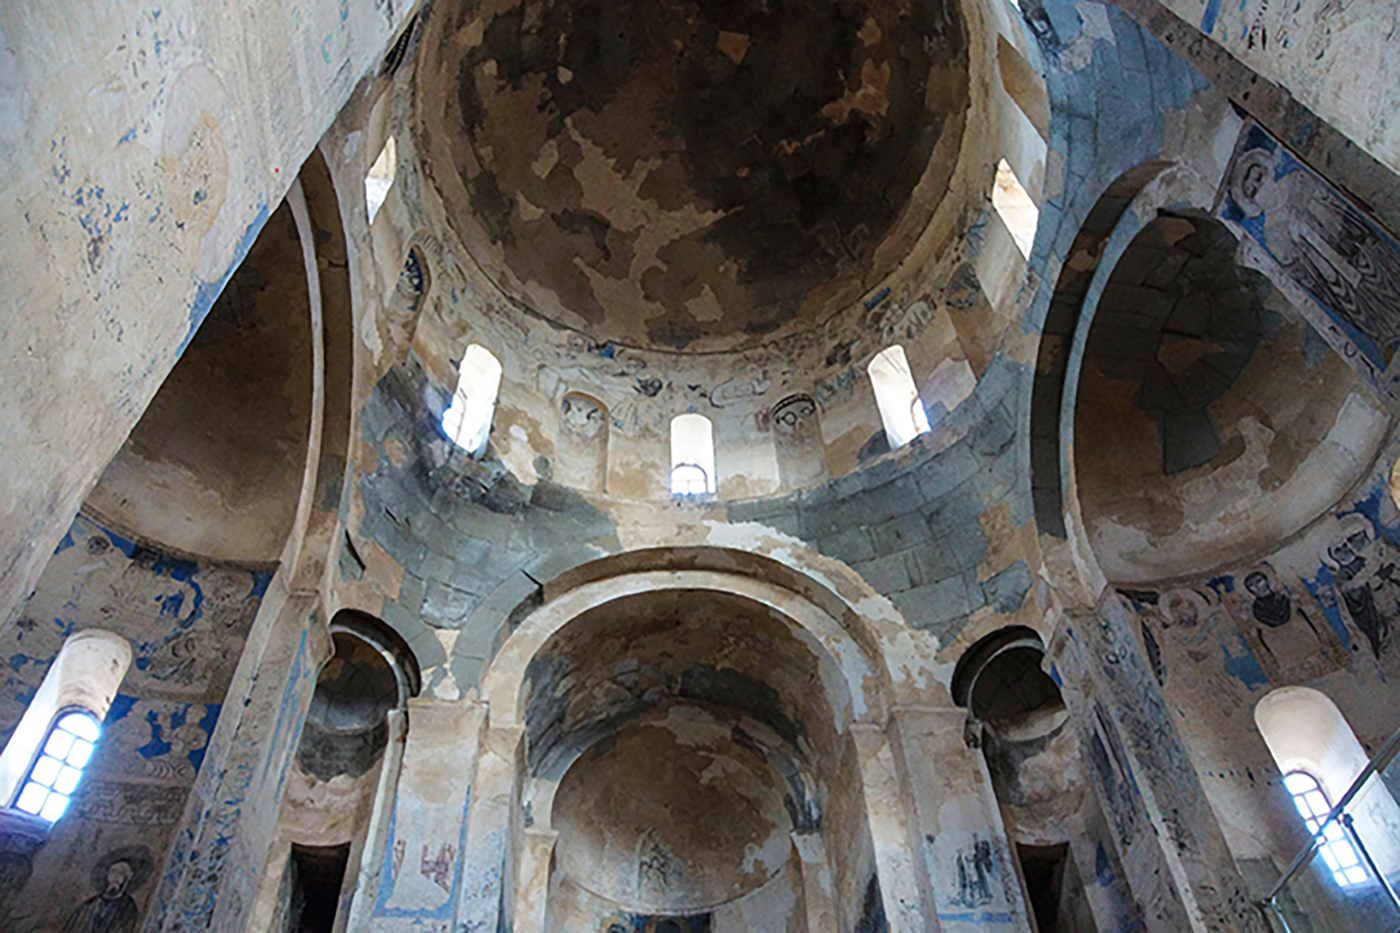 Remains of Christian frescoes in the Armenian Church of the Holy Cross on Akhtamar Island (Akdamar) in Lake Van, Turkey